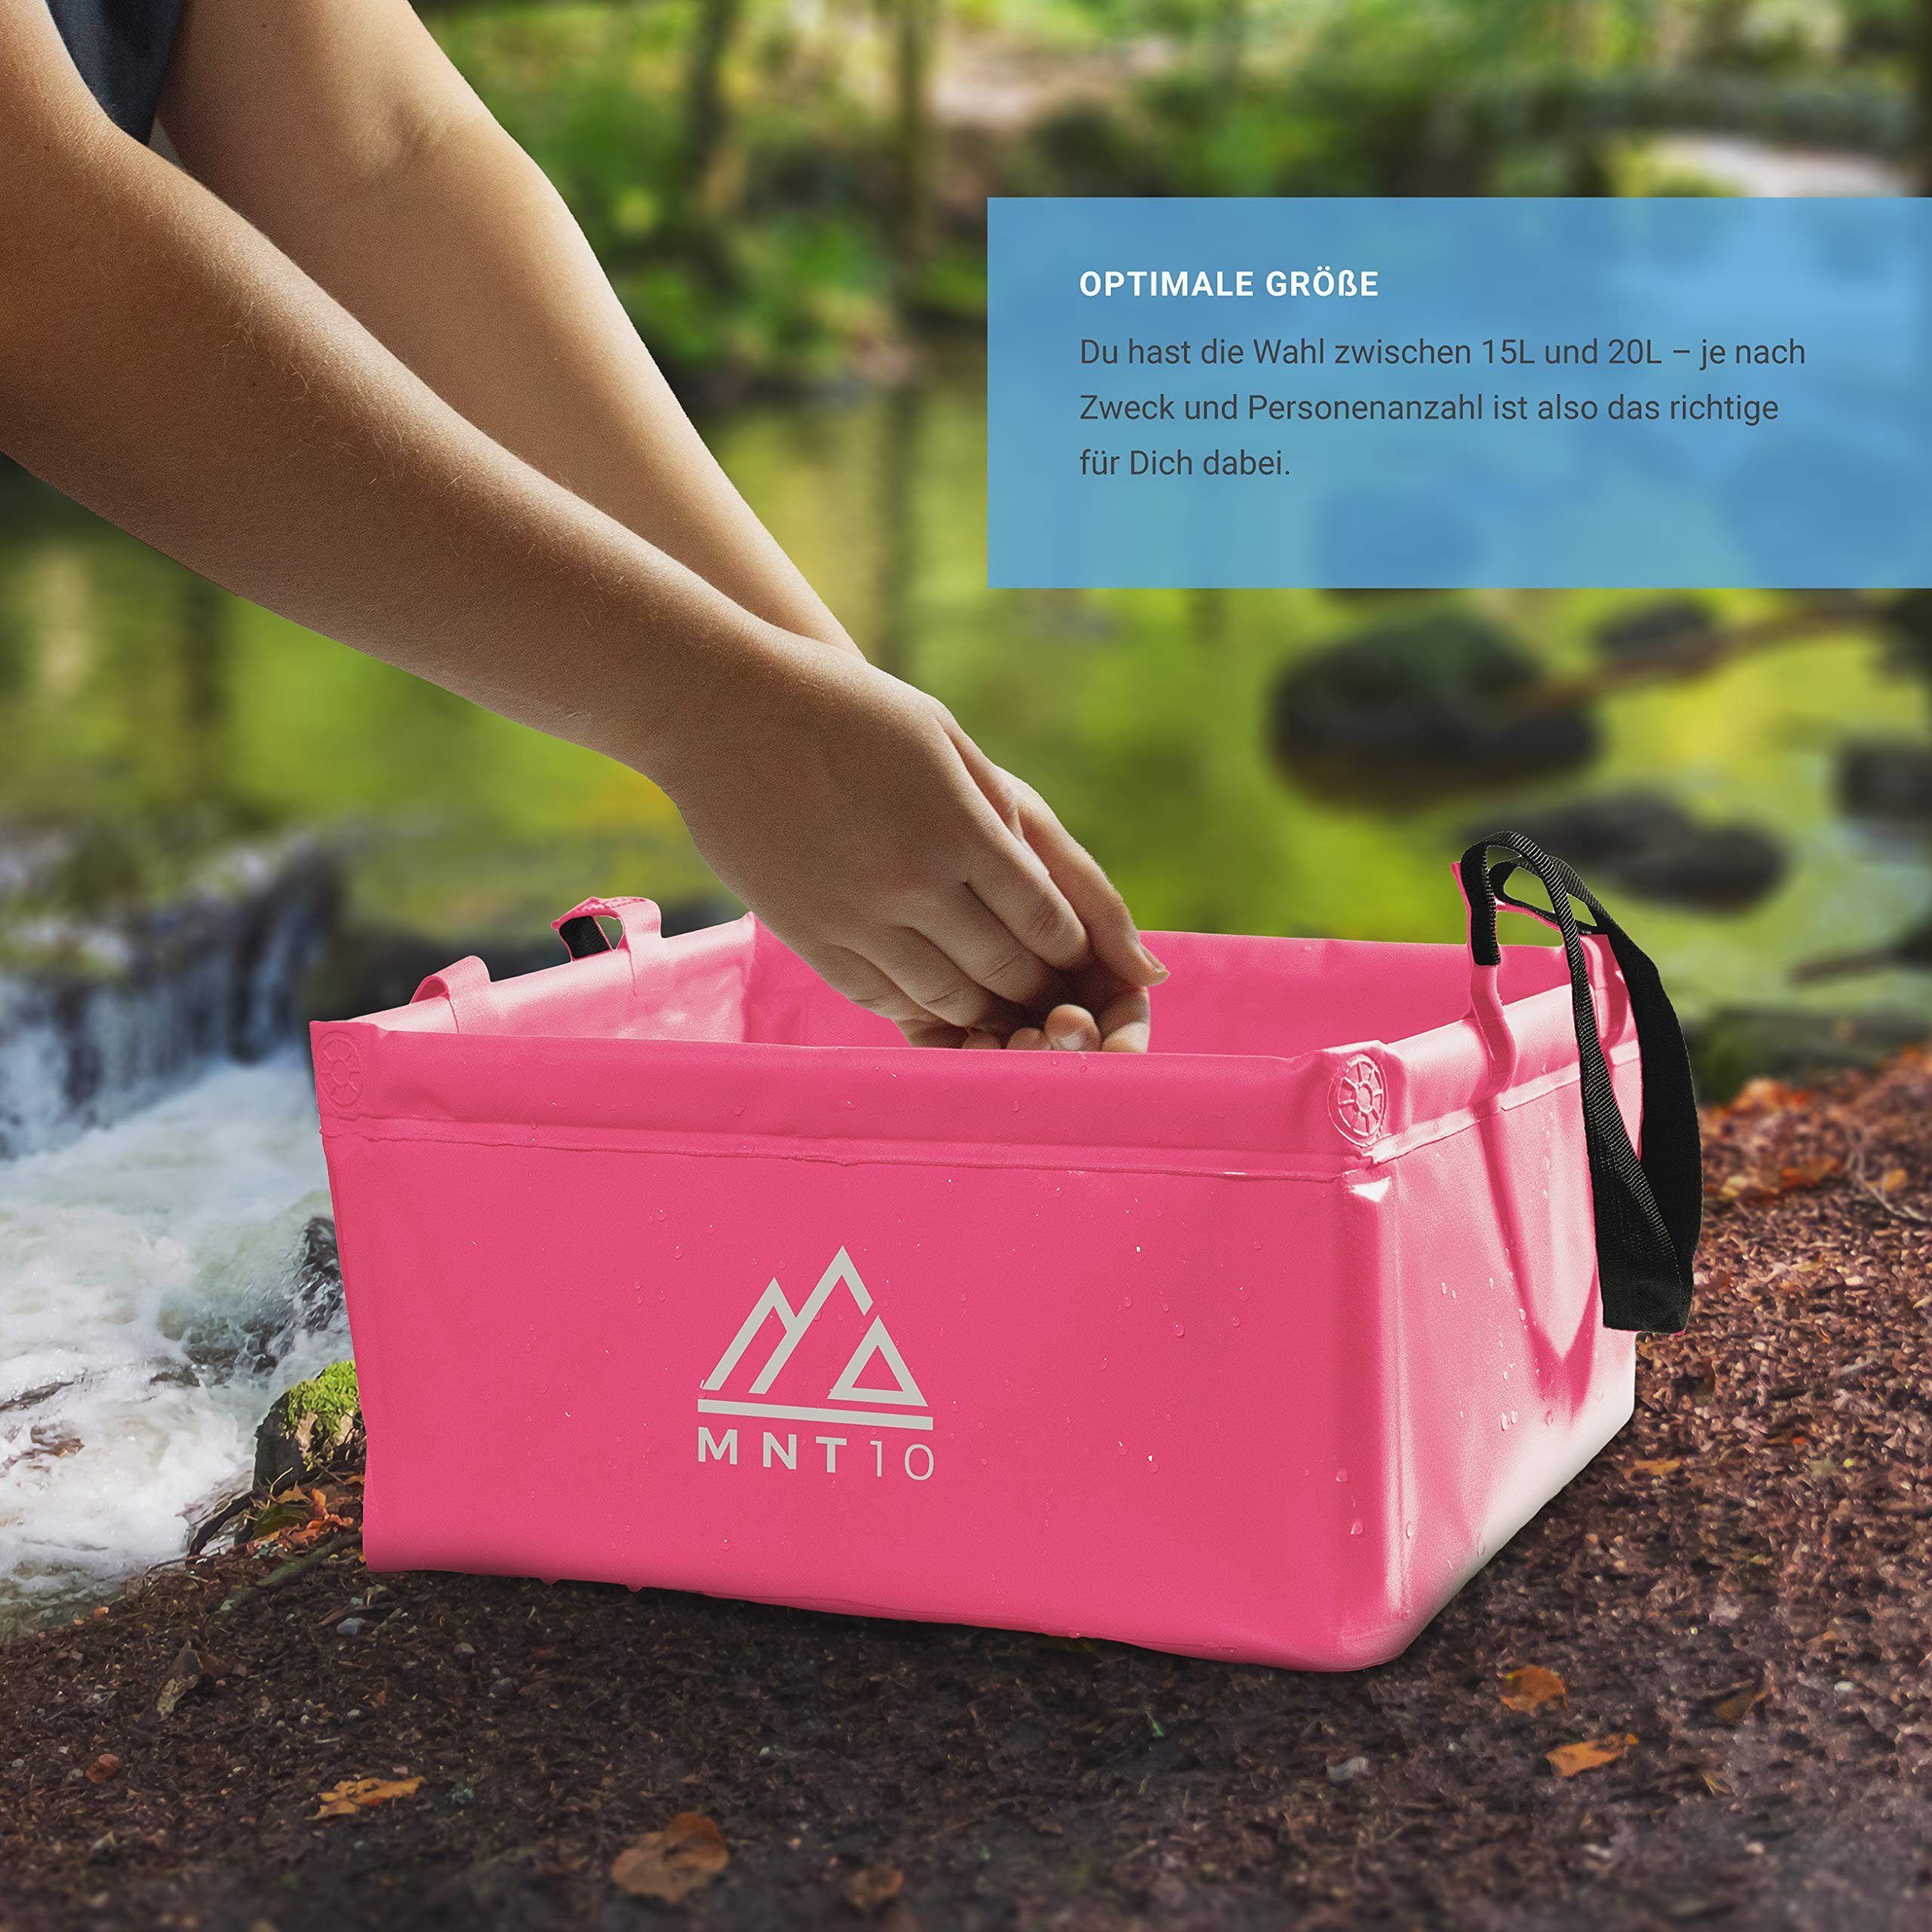 MNT10 Falteimer Outdoor Faltschüssel 15L Pink Als Robuste Camping I Camping-Waschschüssel, & Faltbare I Camping 15L Spülschüssel 20L Waschschüssel